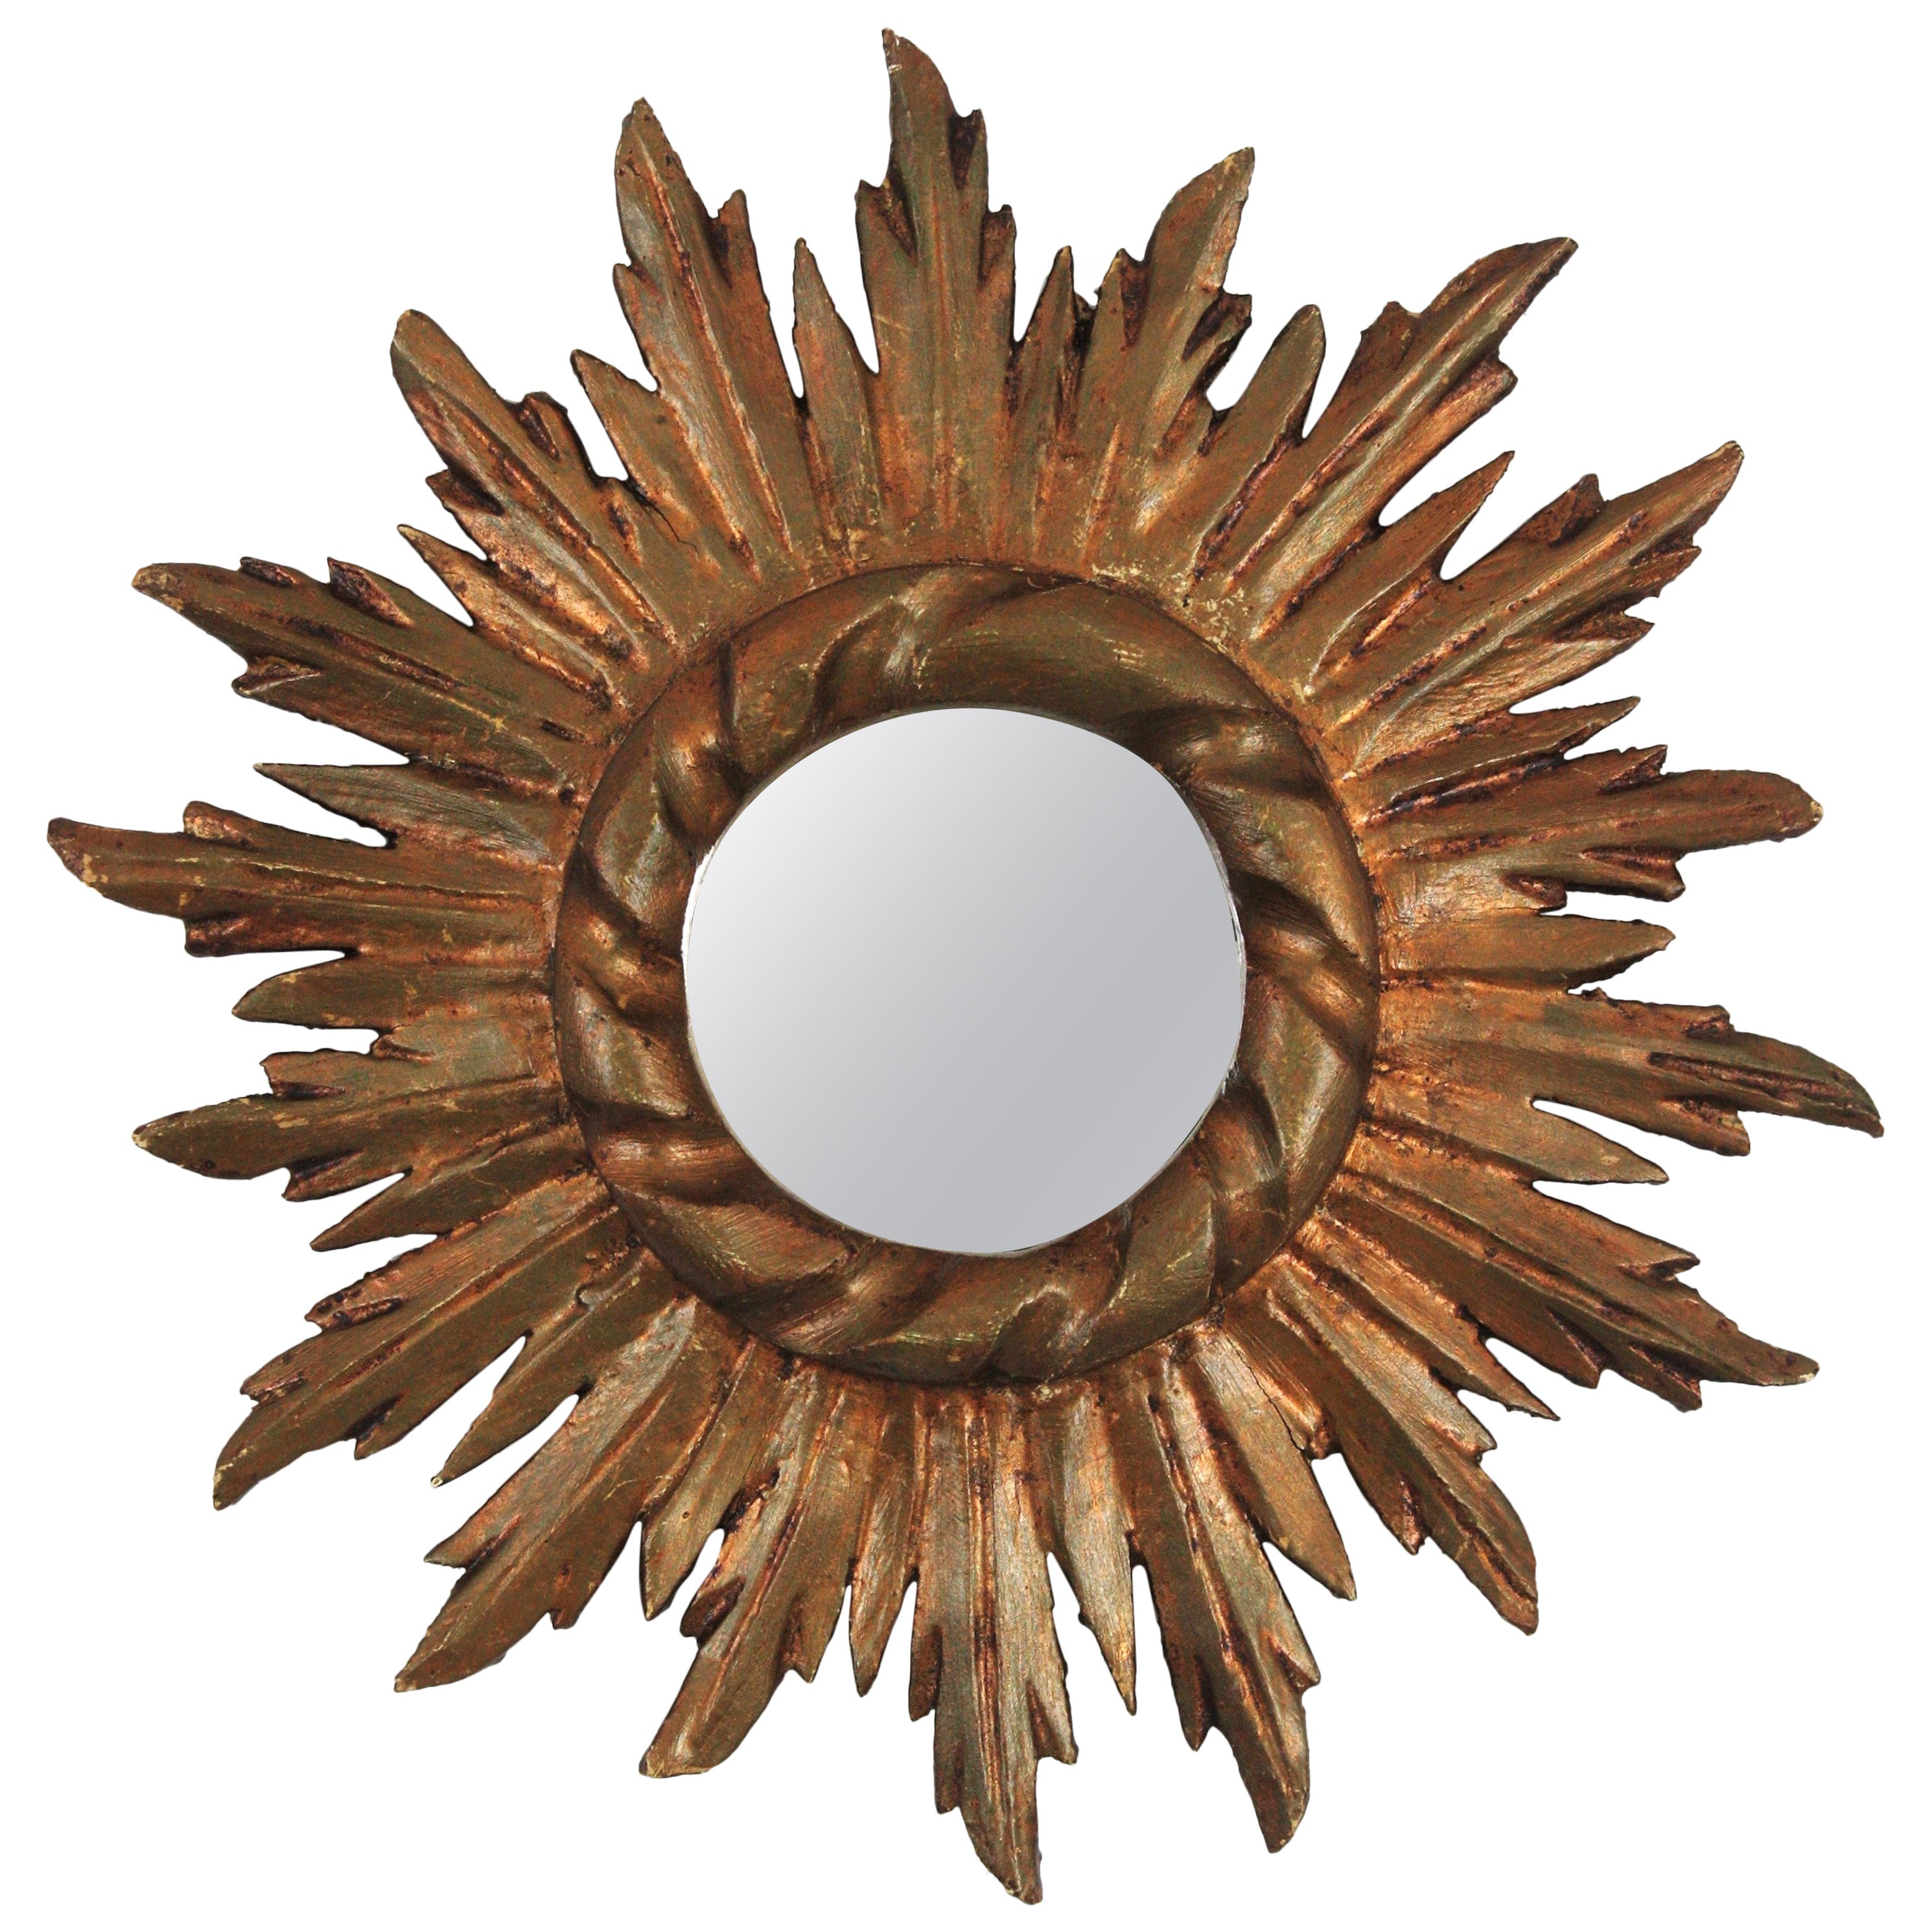 Spanish Sunburst Giltwood Mirror in Baroque Style, Small Size